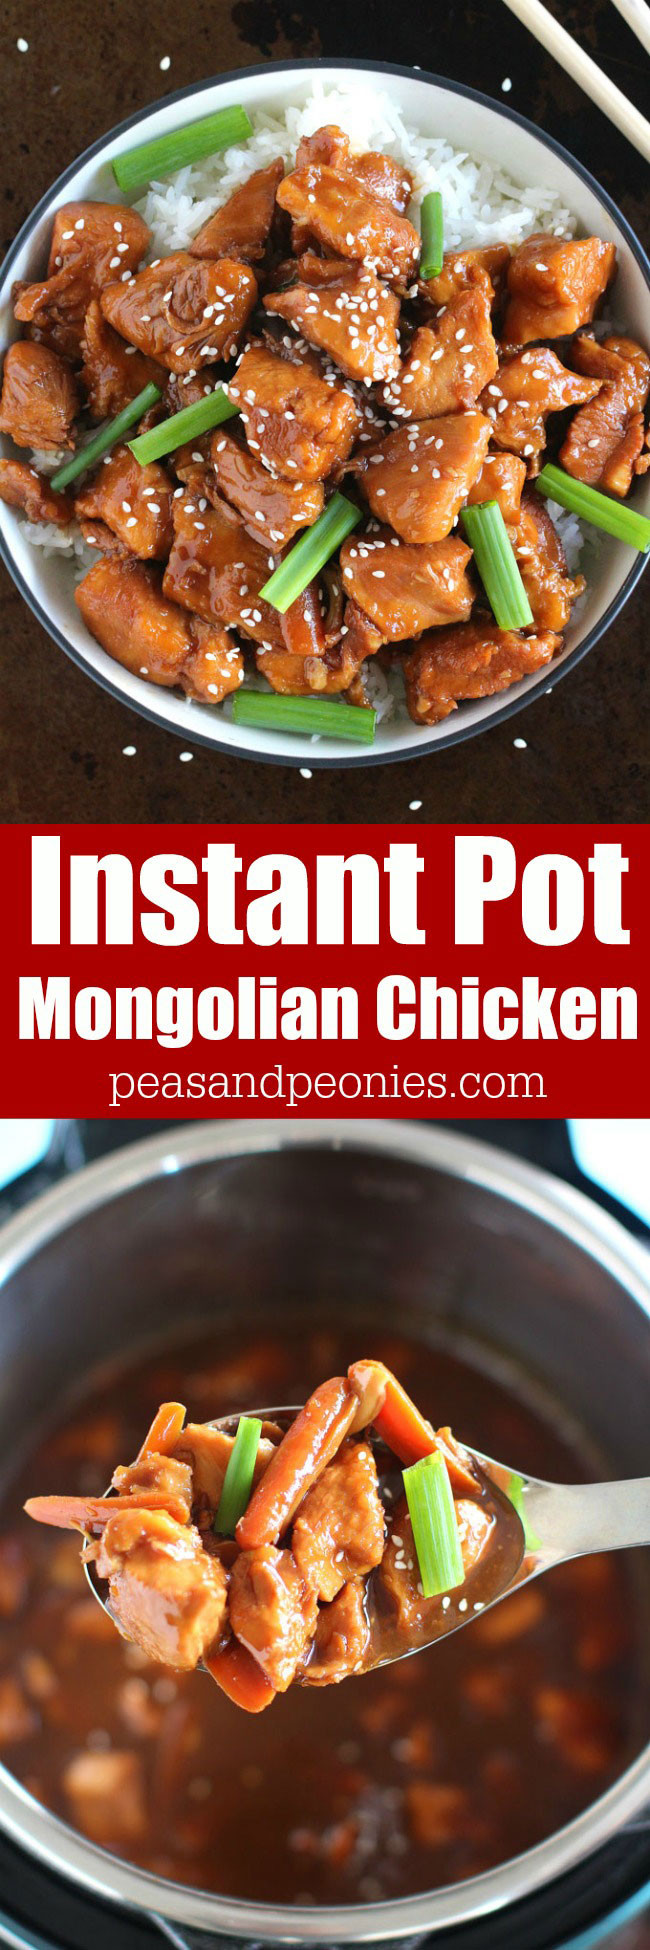 Instant Pot Chicken Tenders
 INSTANT POT MONGOLIAN CHICKEN Peas and Peonies